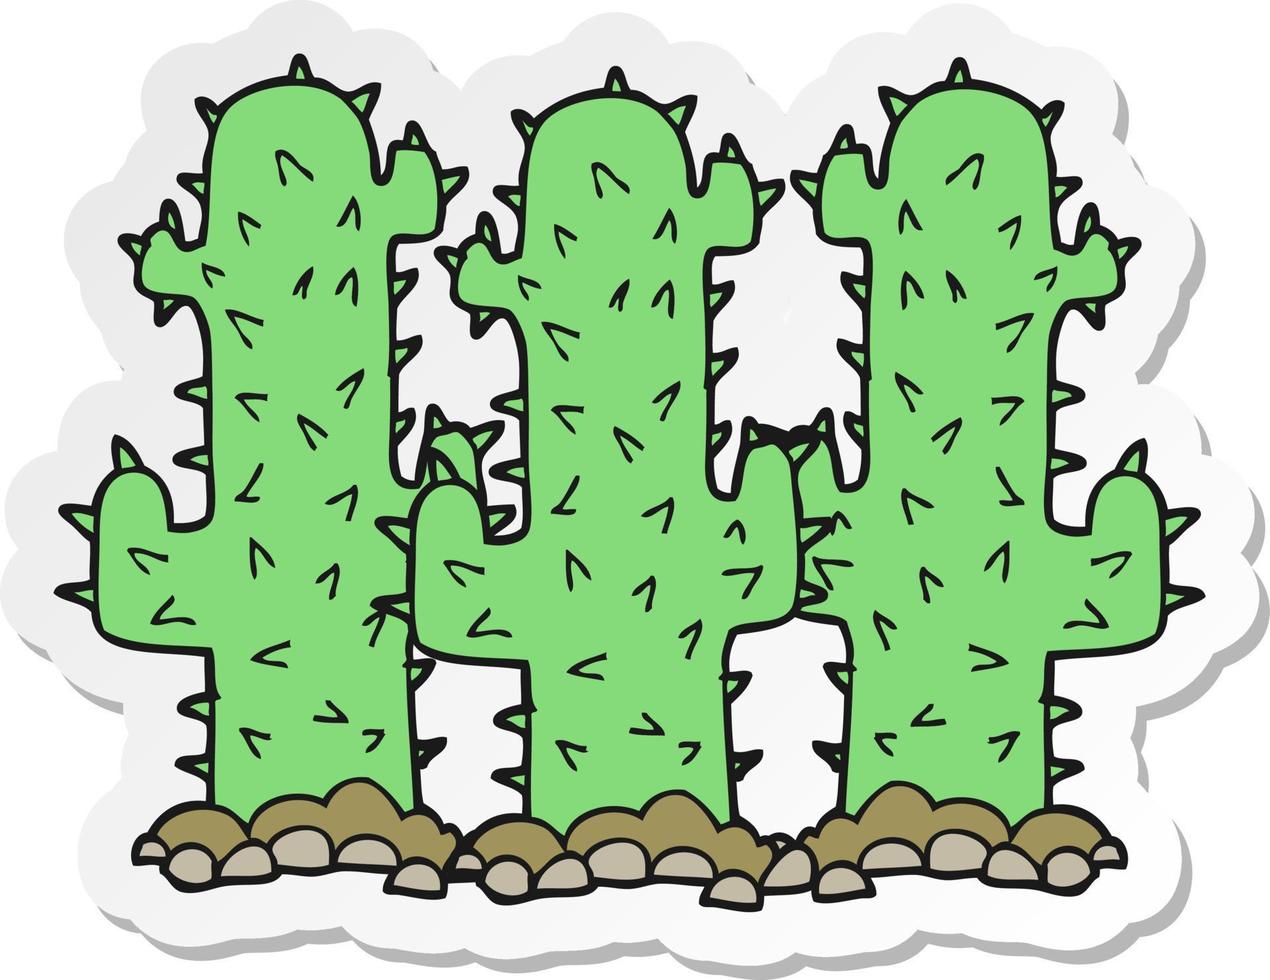 klistermärke av en tecknad kaktus vektor